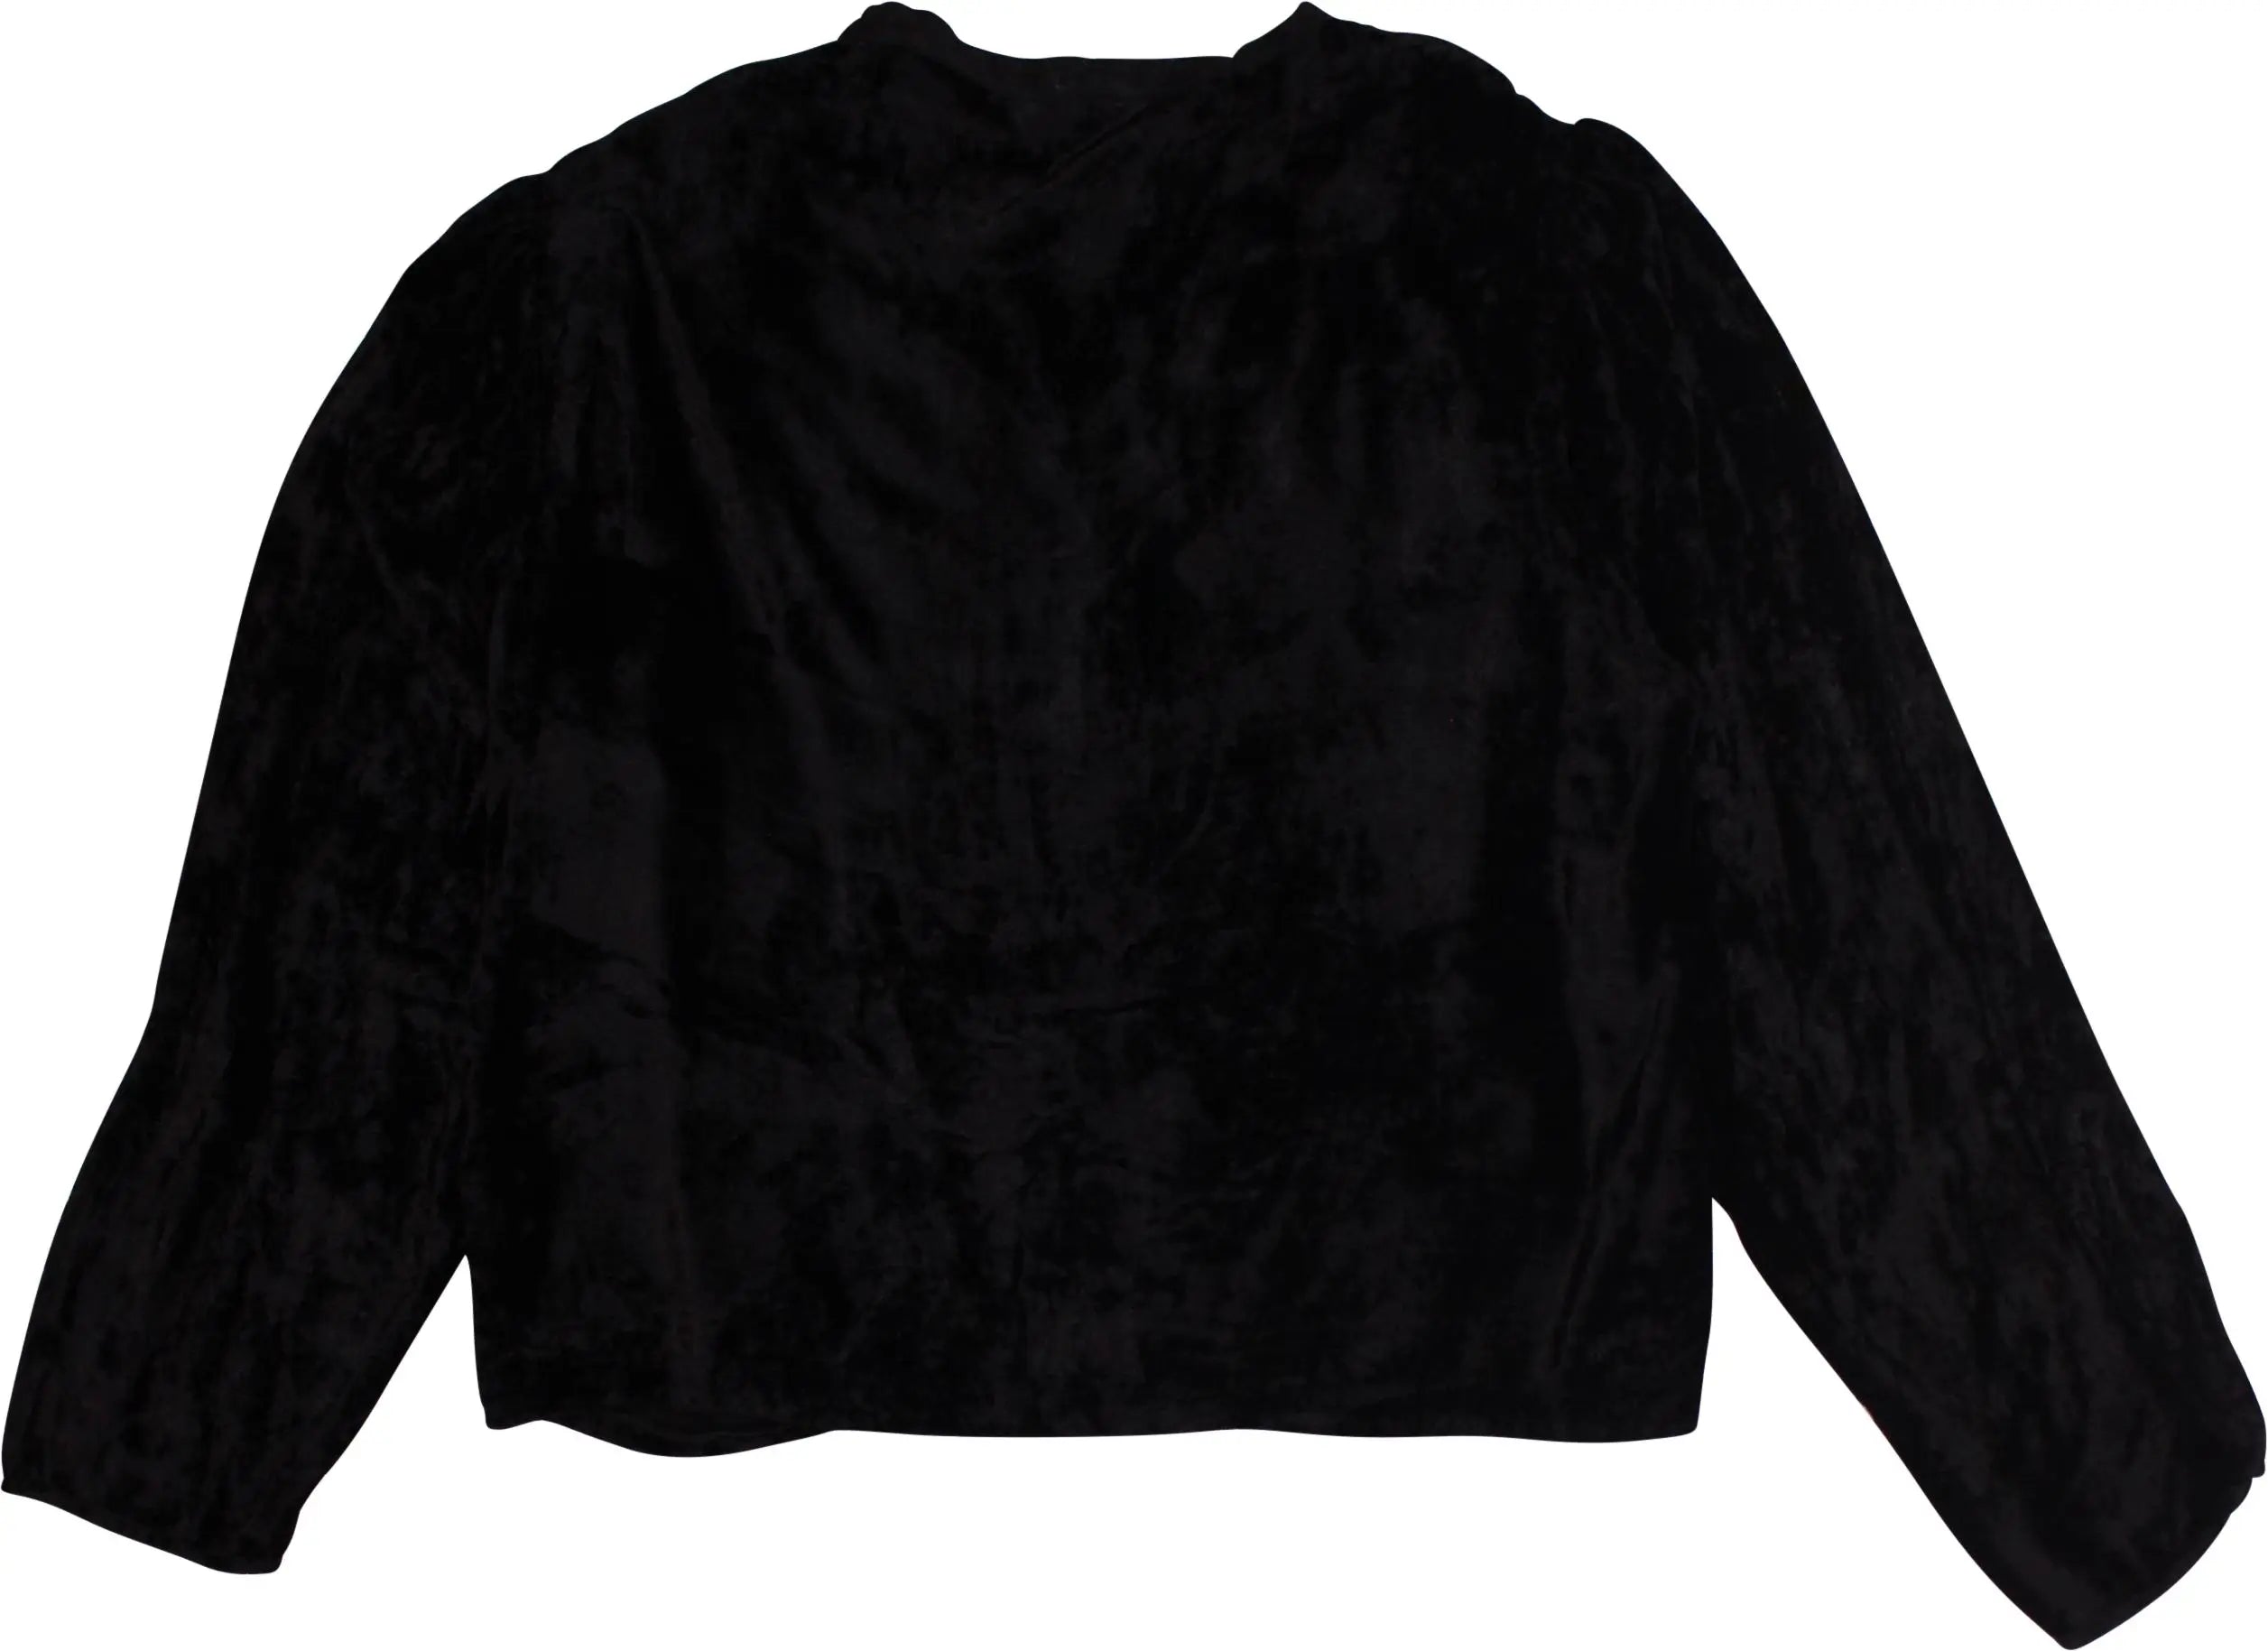 Flo Mazet - Black Velvet Blouse- ThriftTale.com - Vintage and second handclothing